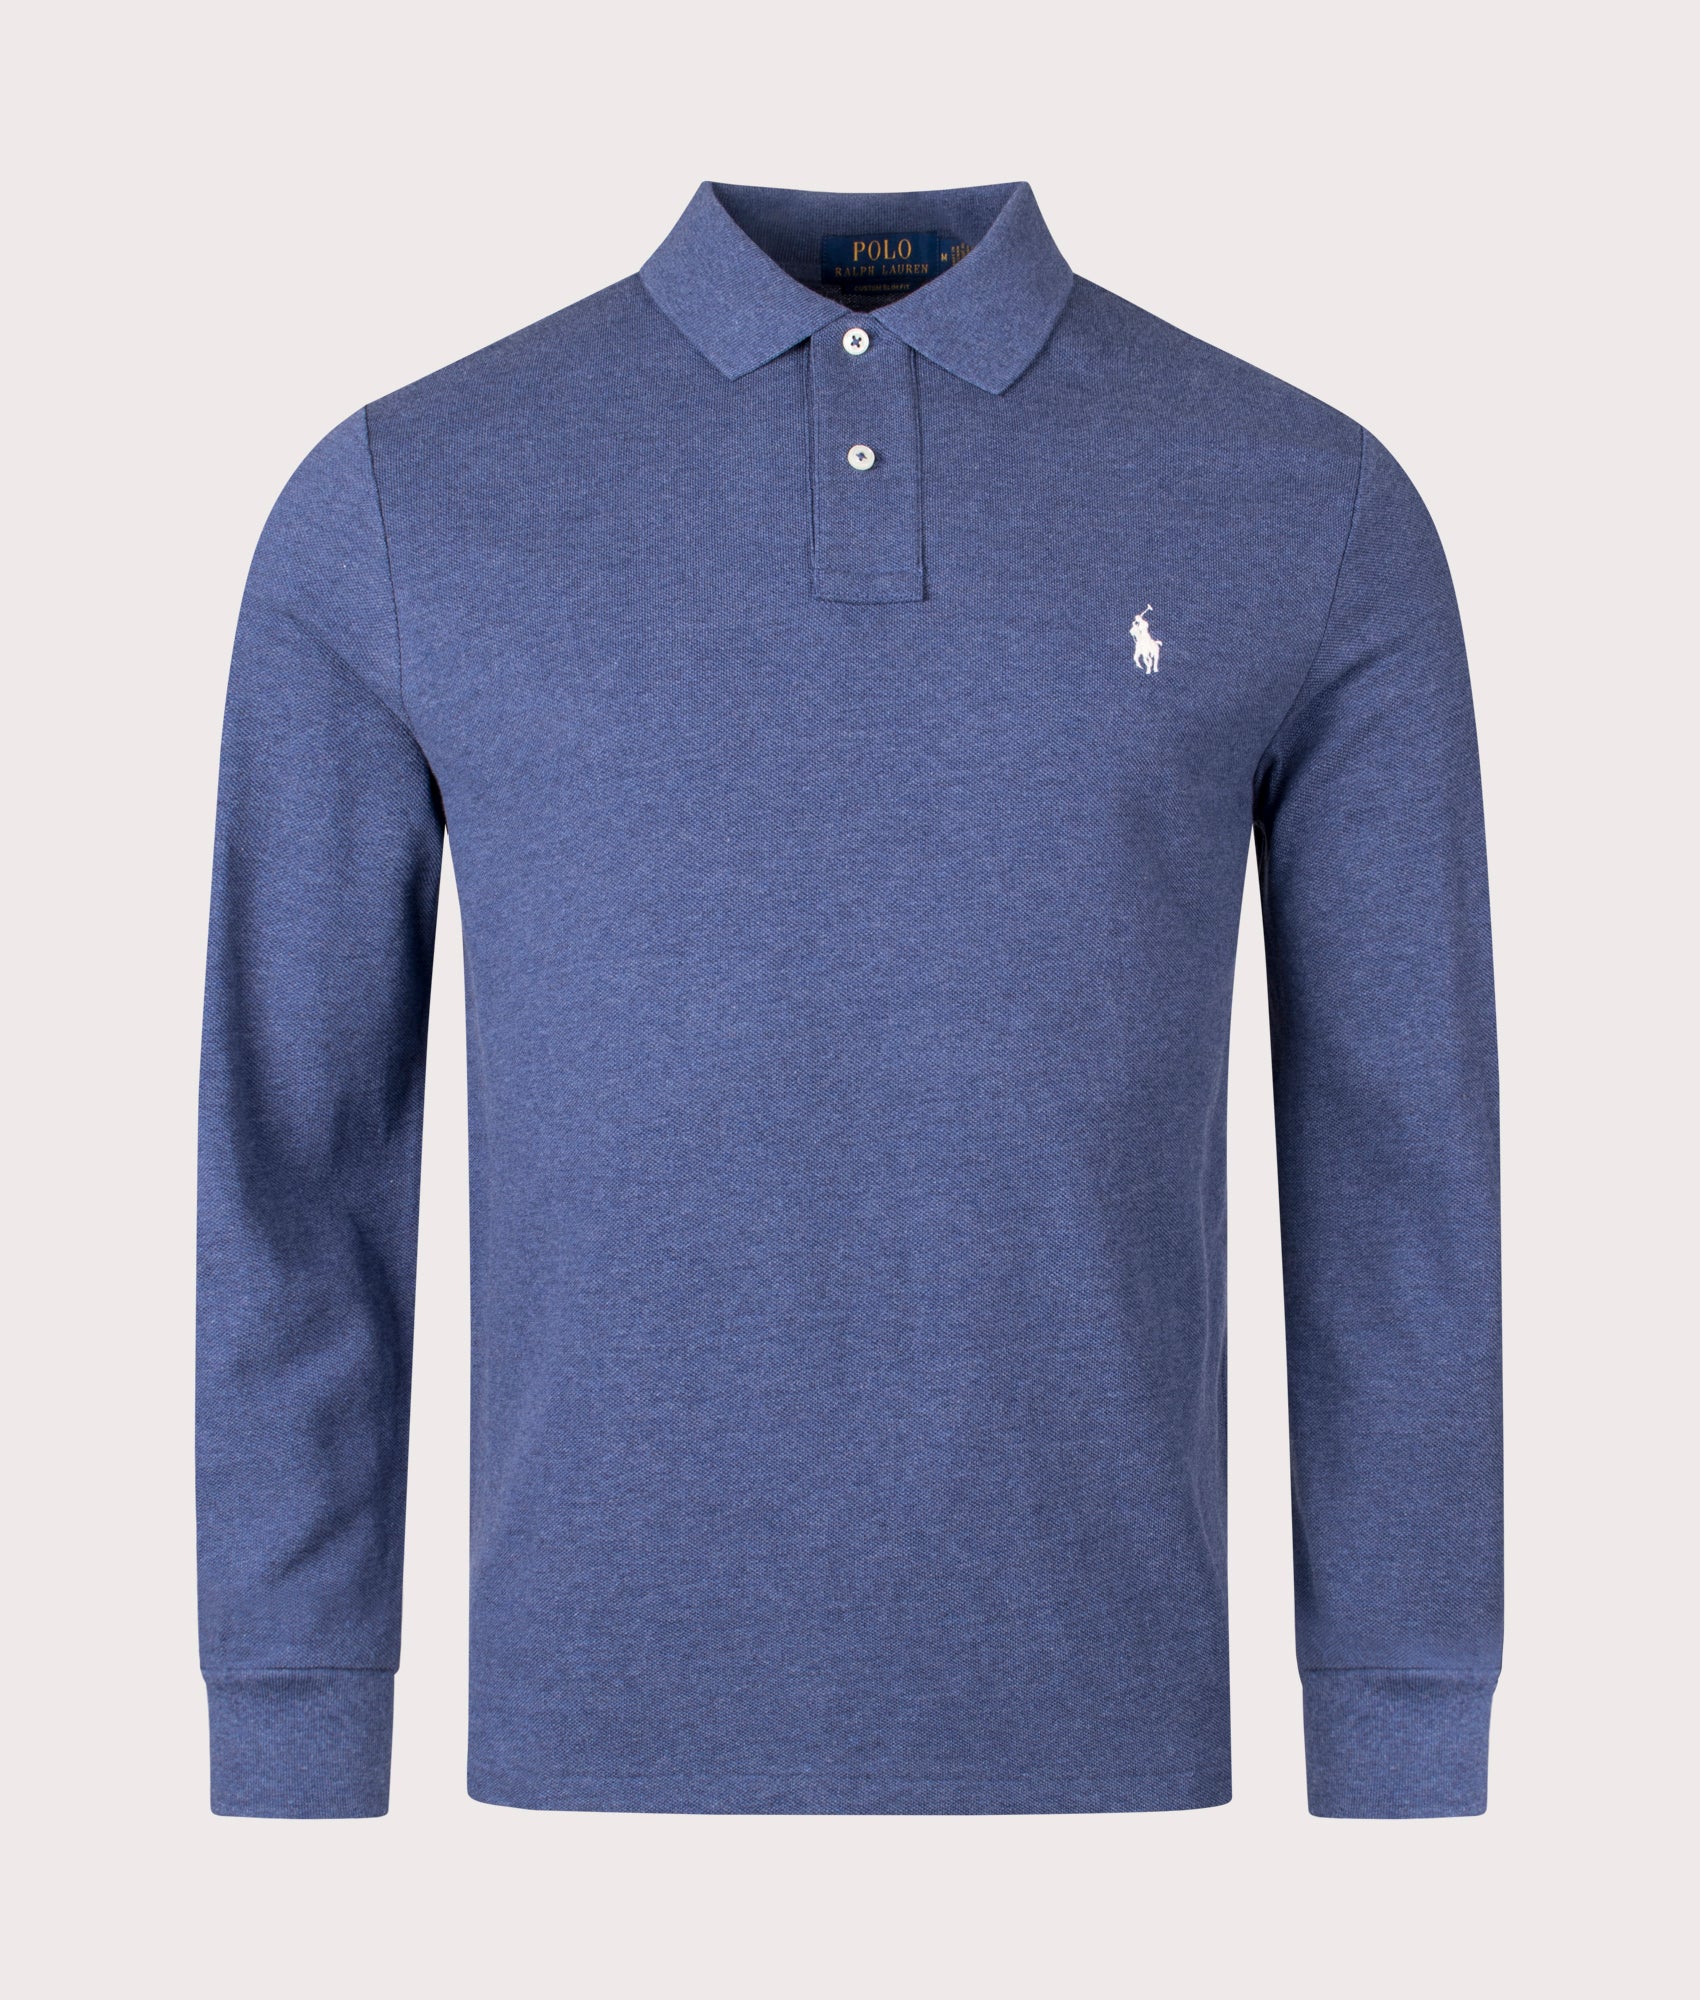 Polo Ralph Lauren Mens Custom Slim Fit Long Sleeve Polo Shirt - Colour: 113 Isle Heather - Size: Med